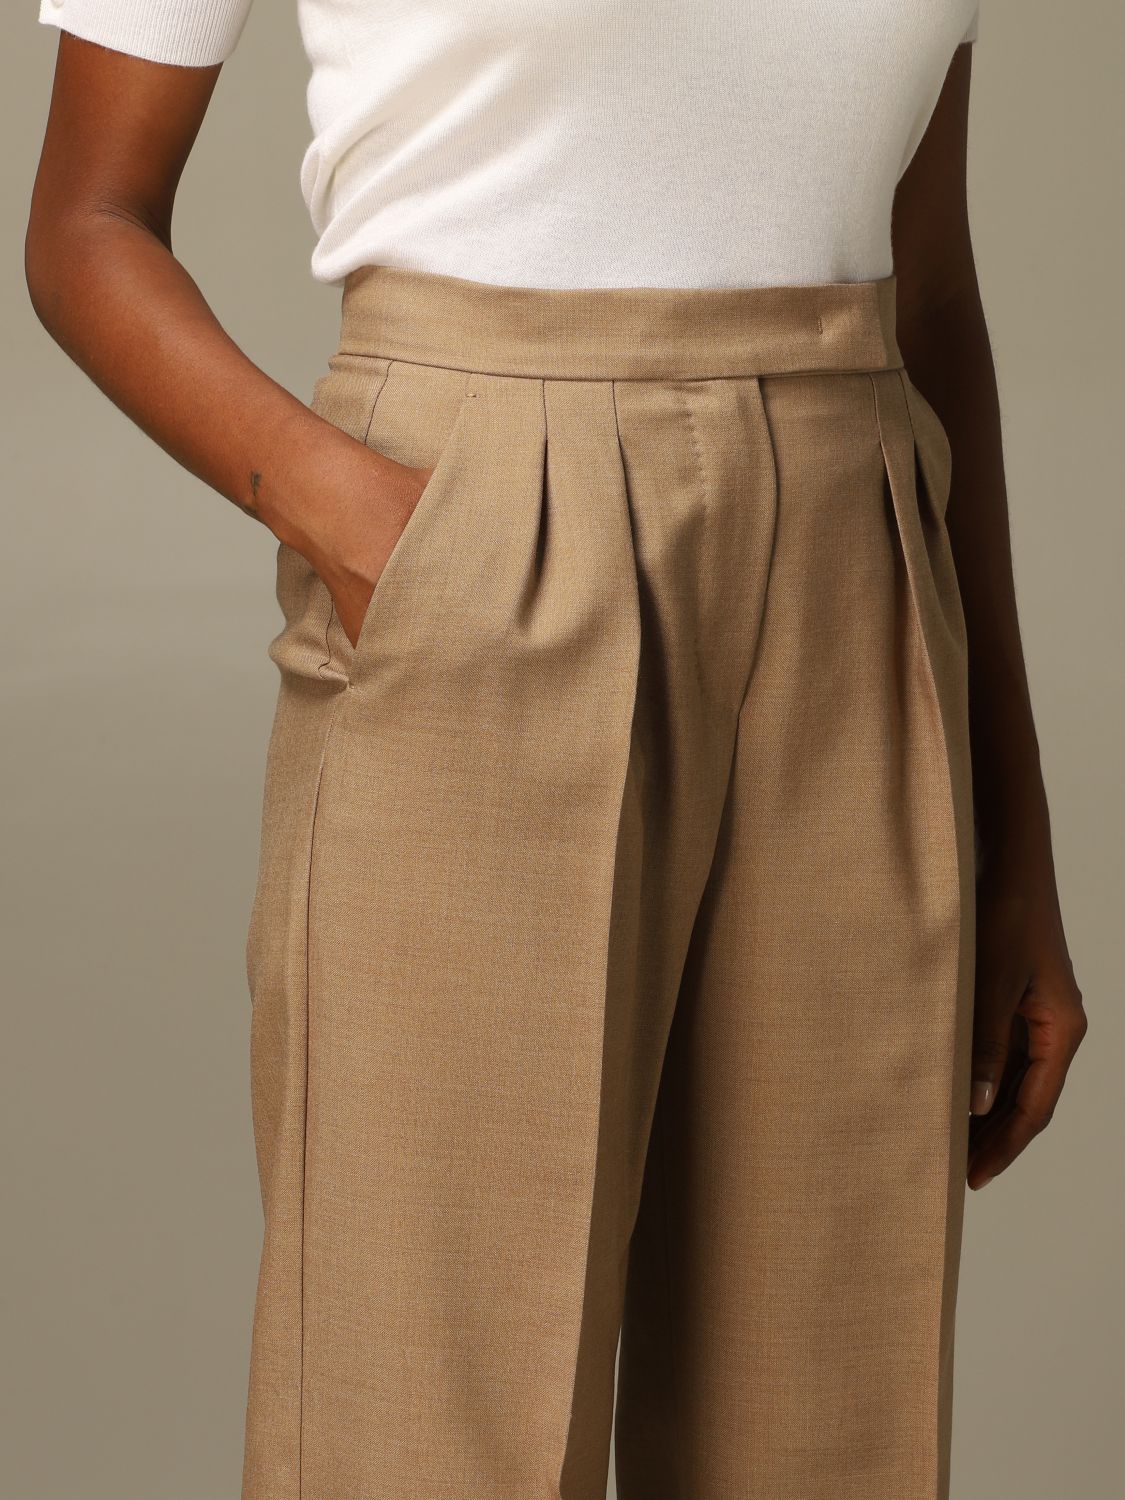 Galea Max Mara wide trousers in mohair silk | Pants Max Mara Women